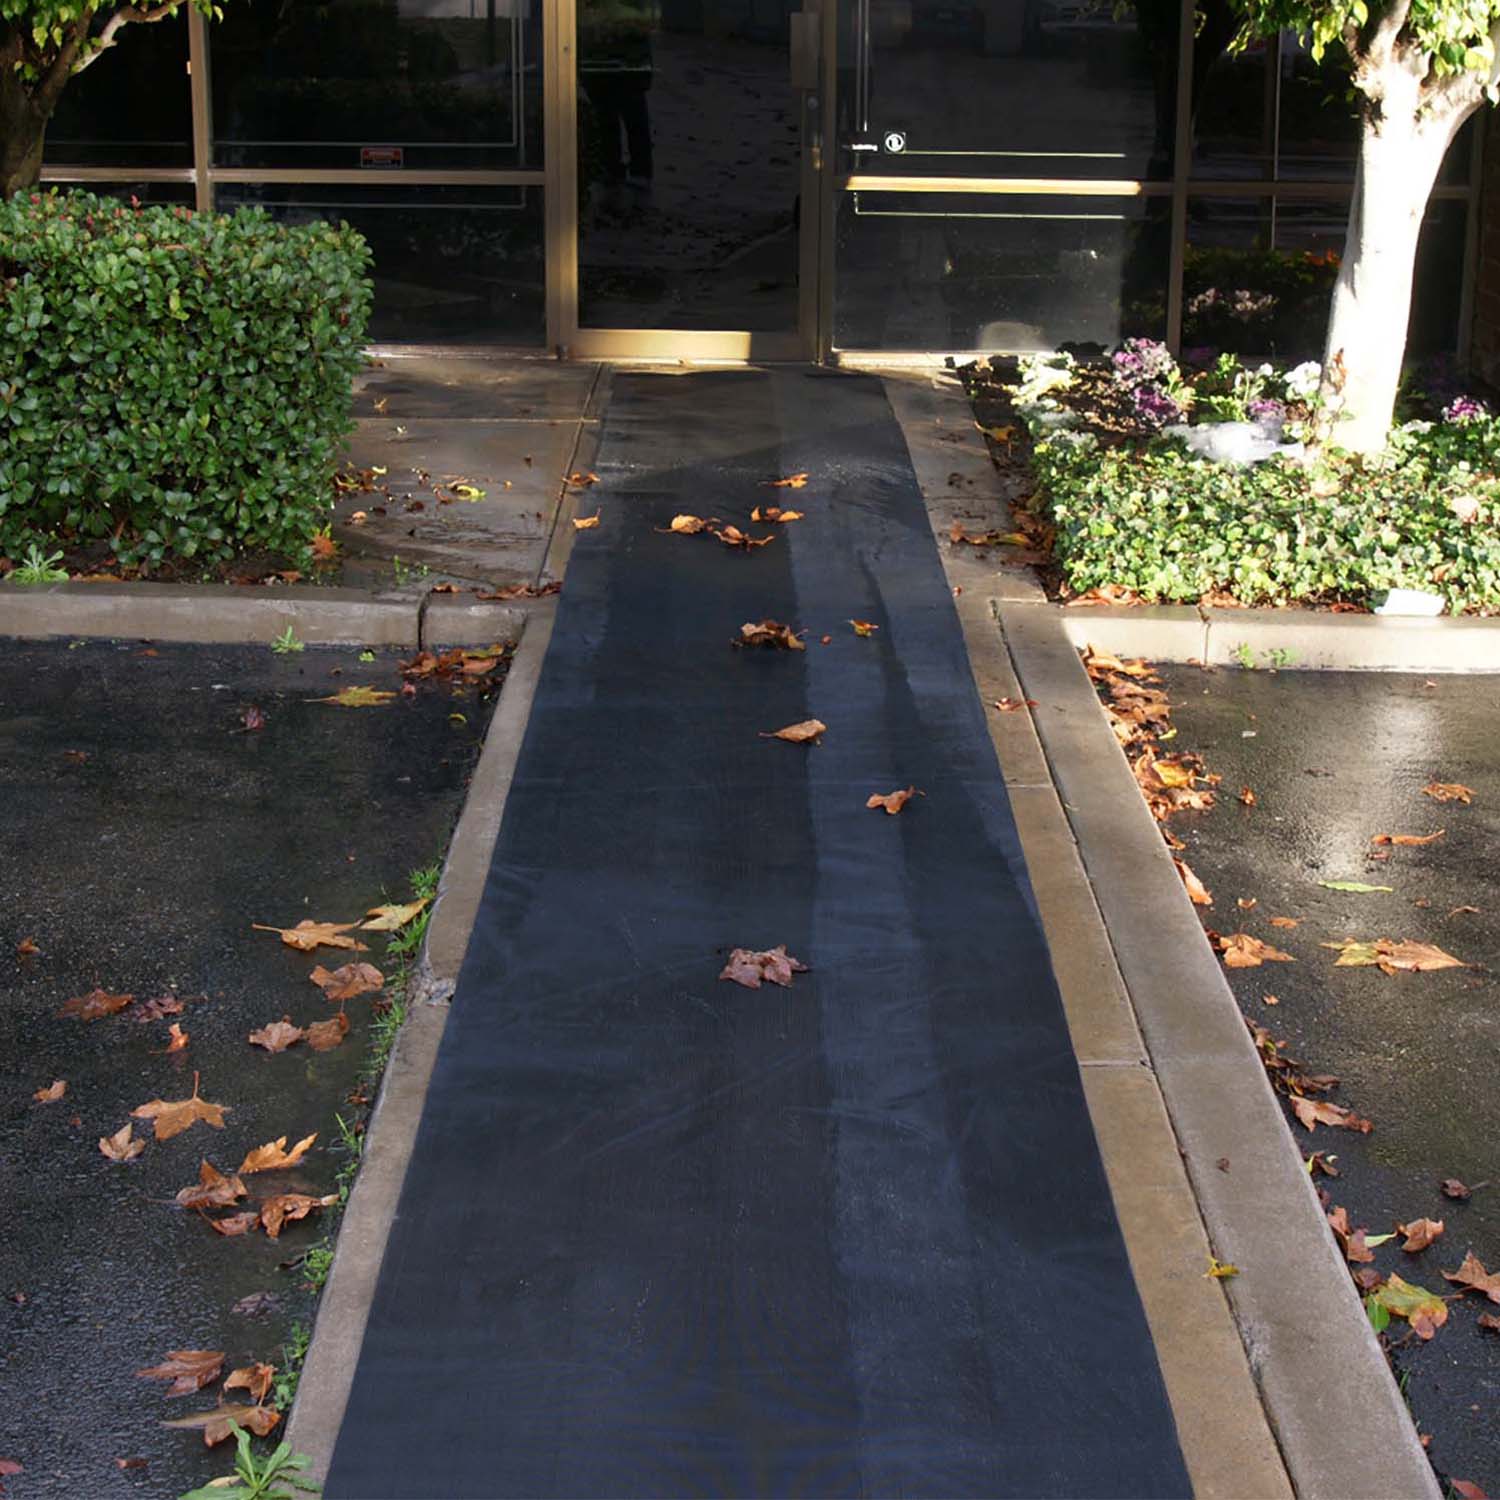 Black Rib Pattern Rubber Mat Indoor Outdoor Heavy Duty Non-slip Mat  Protection 36wrubber Floor Mats ,corrugated Rubber Floor Mats Runners 